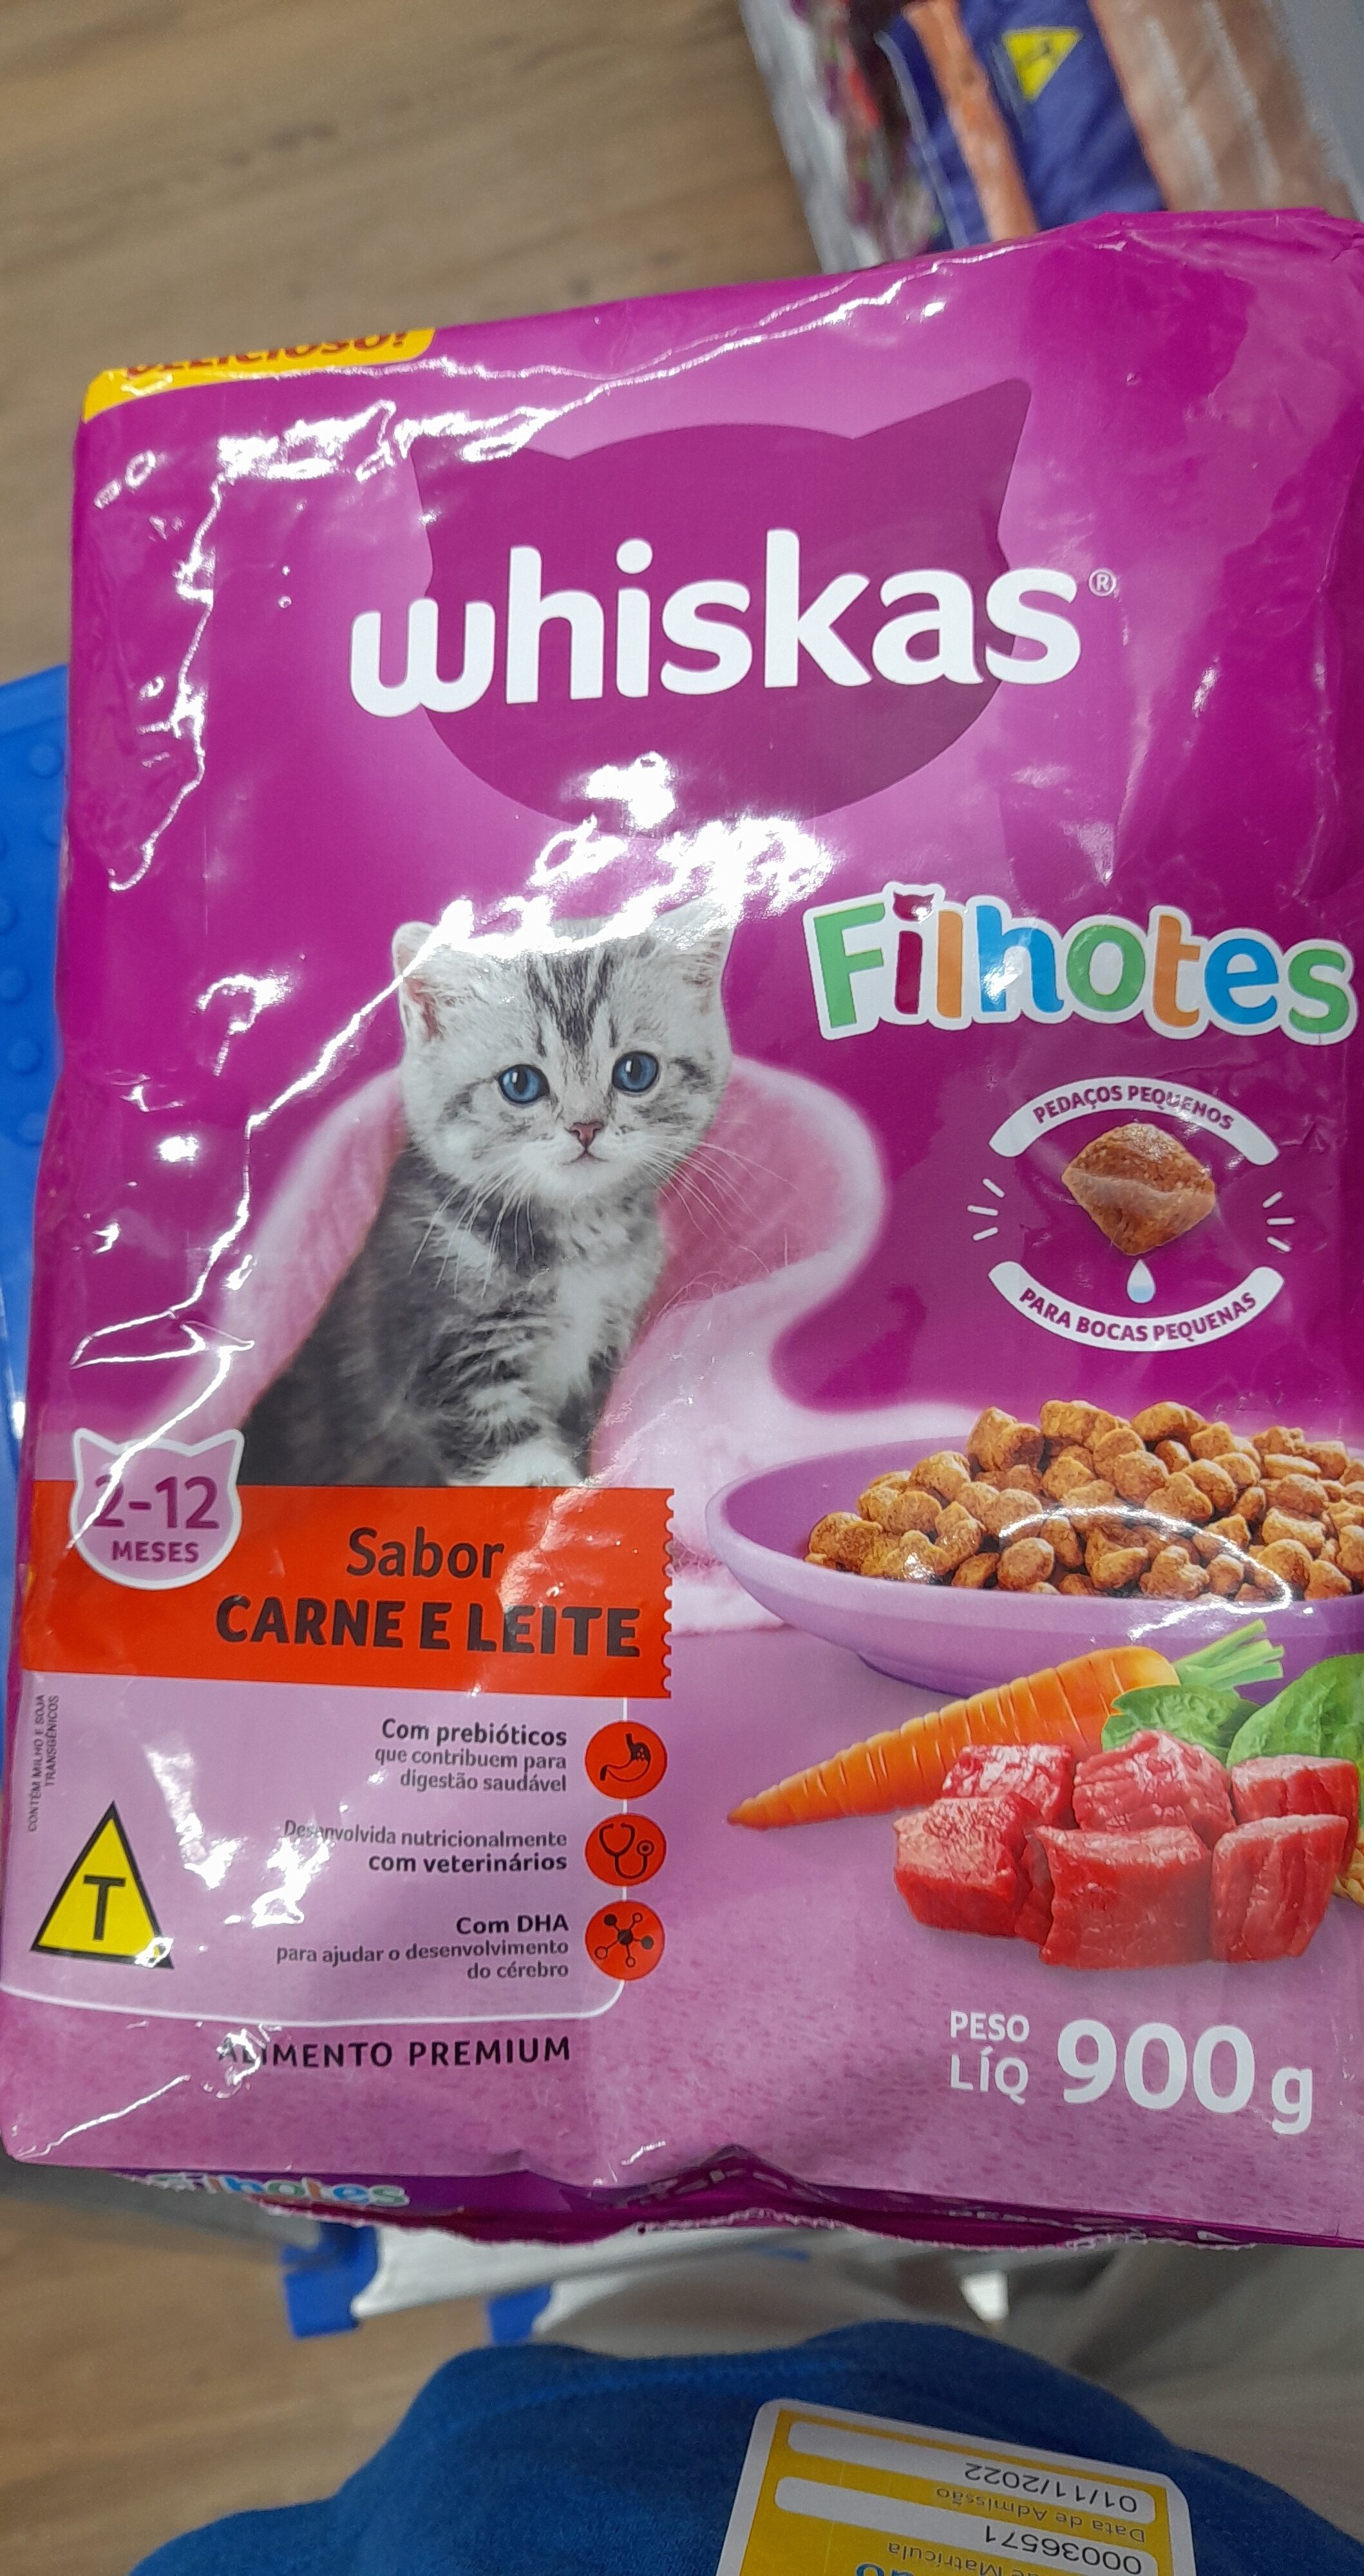 Whiskas fil.cnw.leite - Product - pt